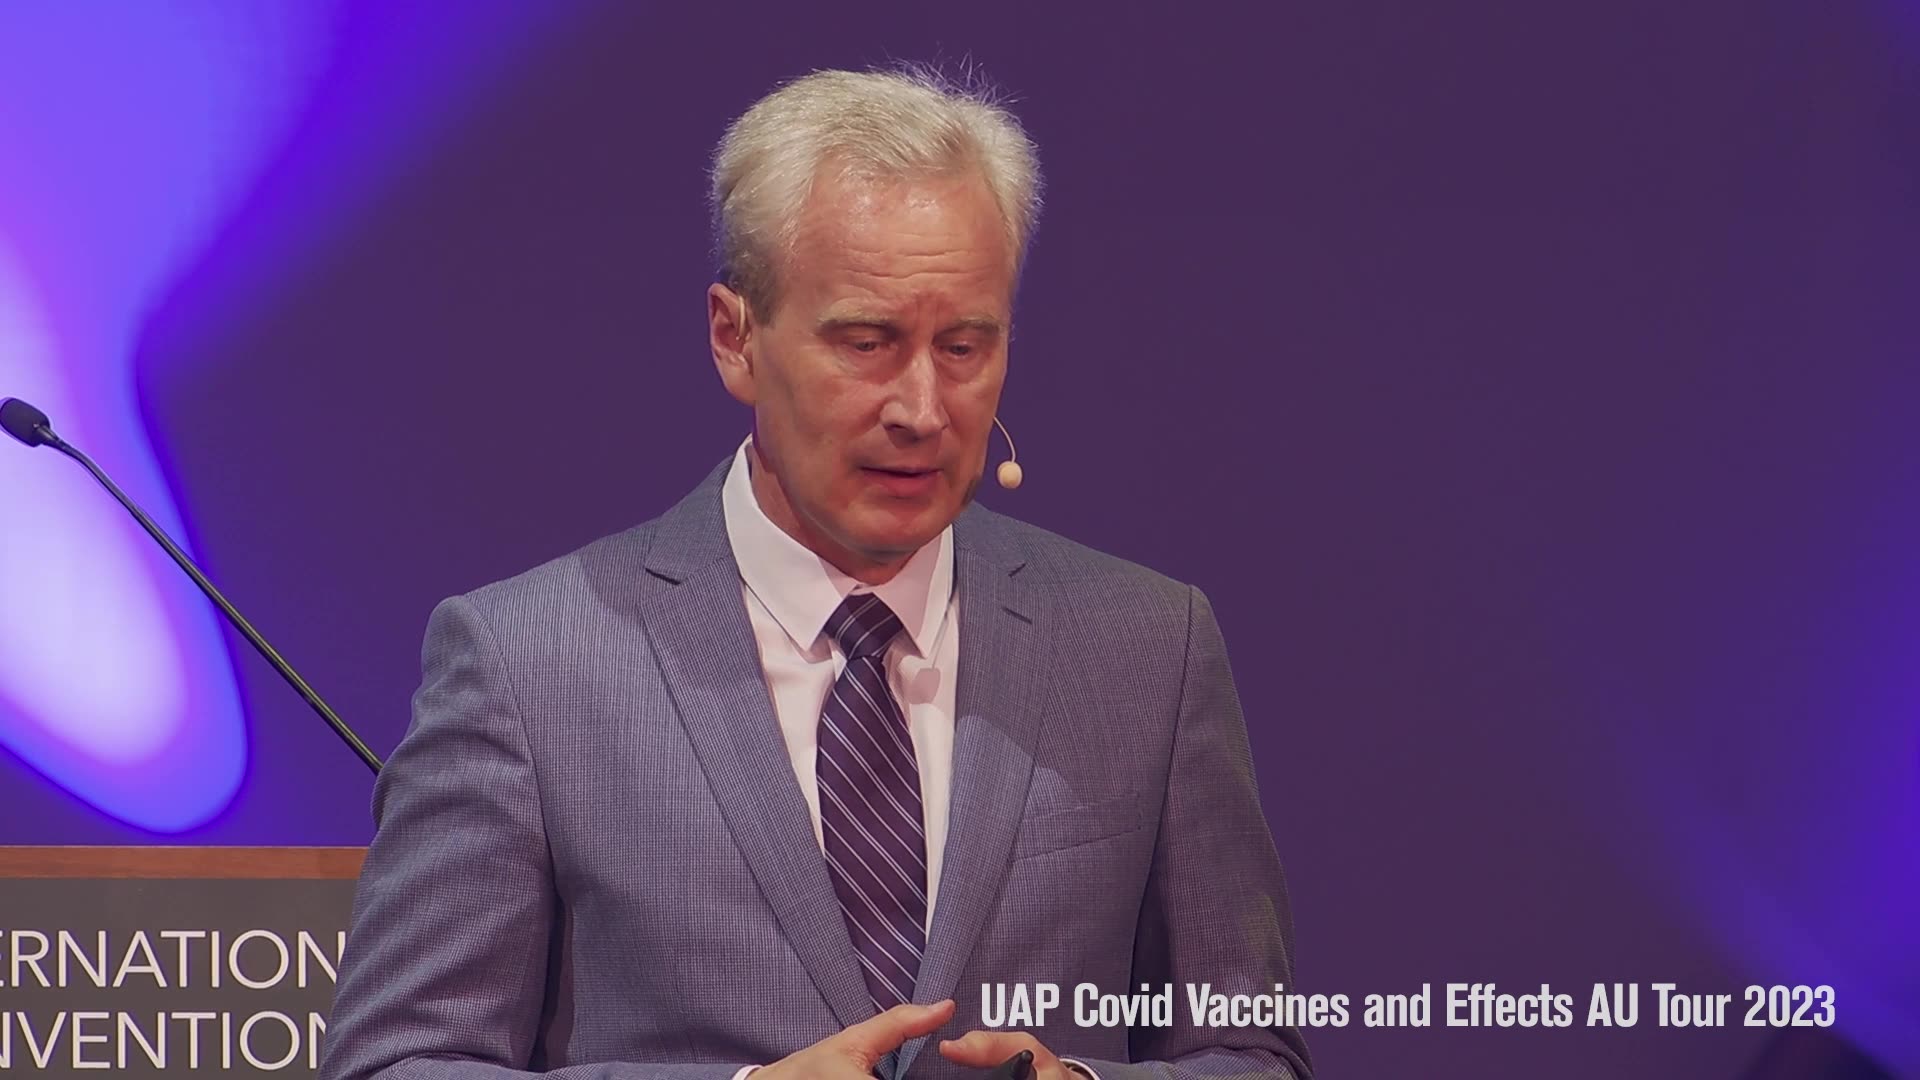 Dr Peter McCullough's Speech - Covid Vaccines & Effects Tour - Sydney, Australia 2023